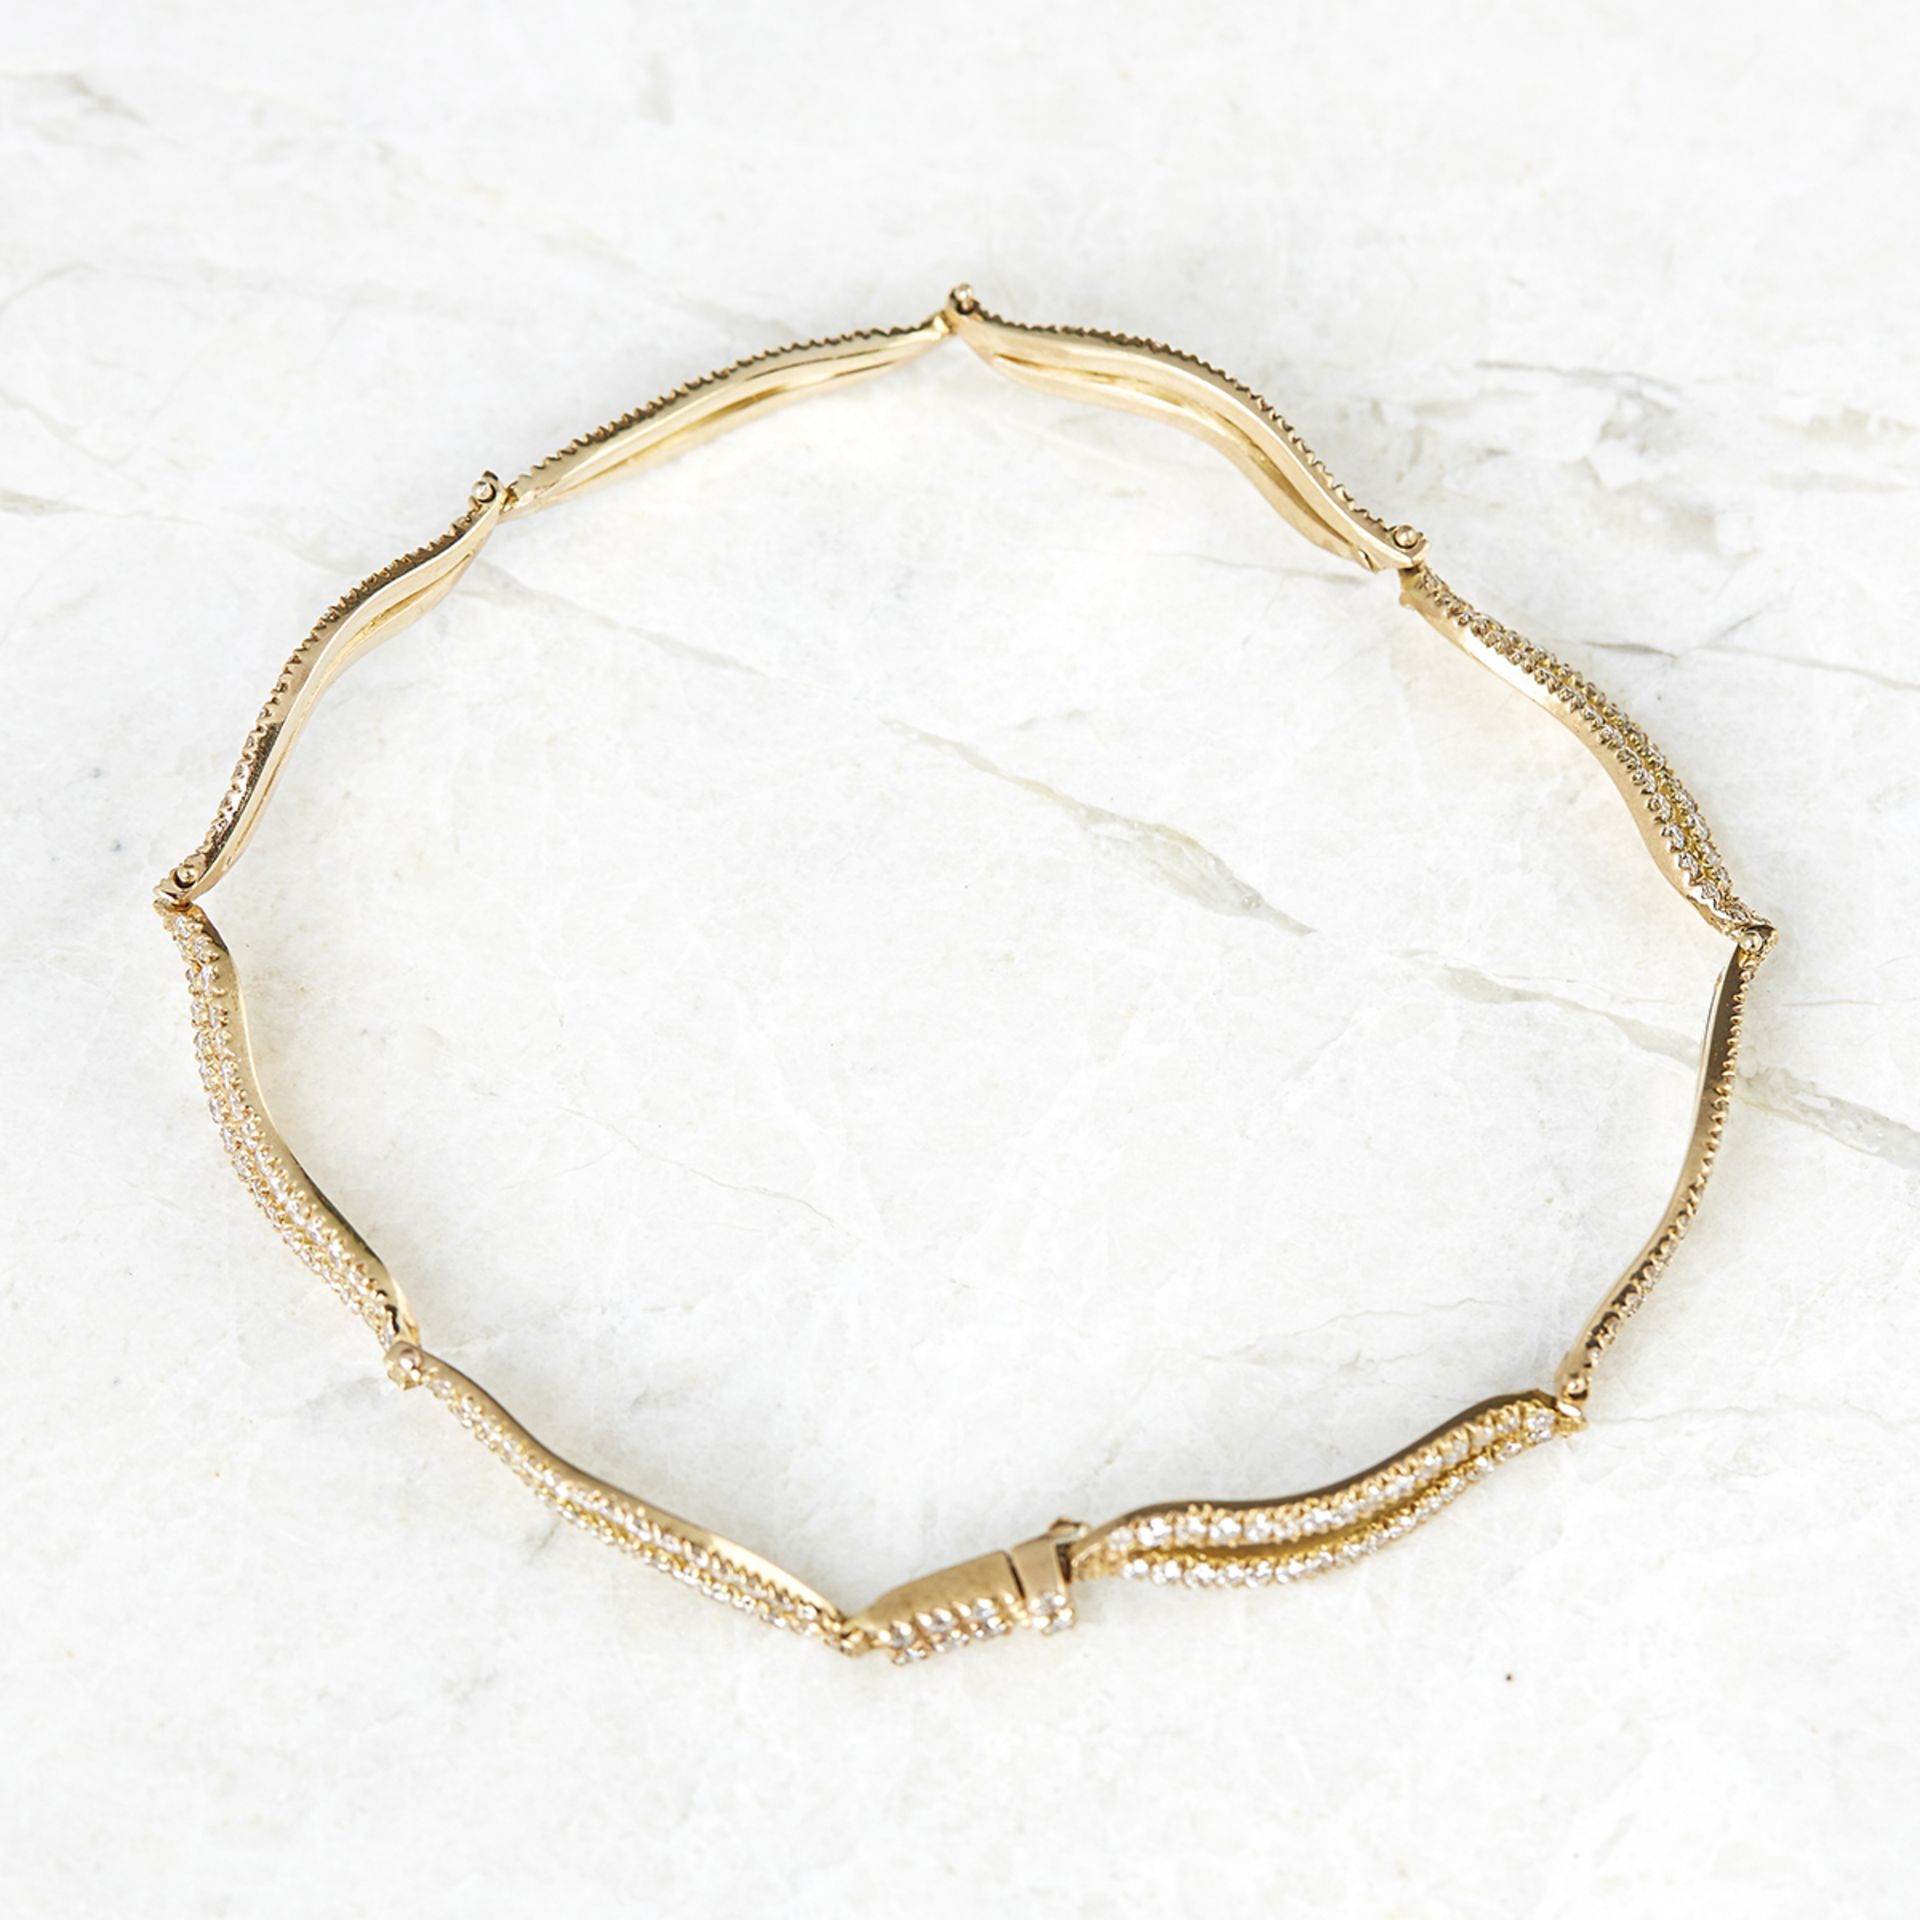 Unbranded, 18k Yellow Gold 2.56ct Diamond Wavy Link Bracelet - Image 6 of 6